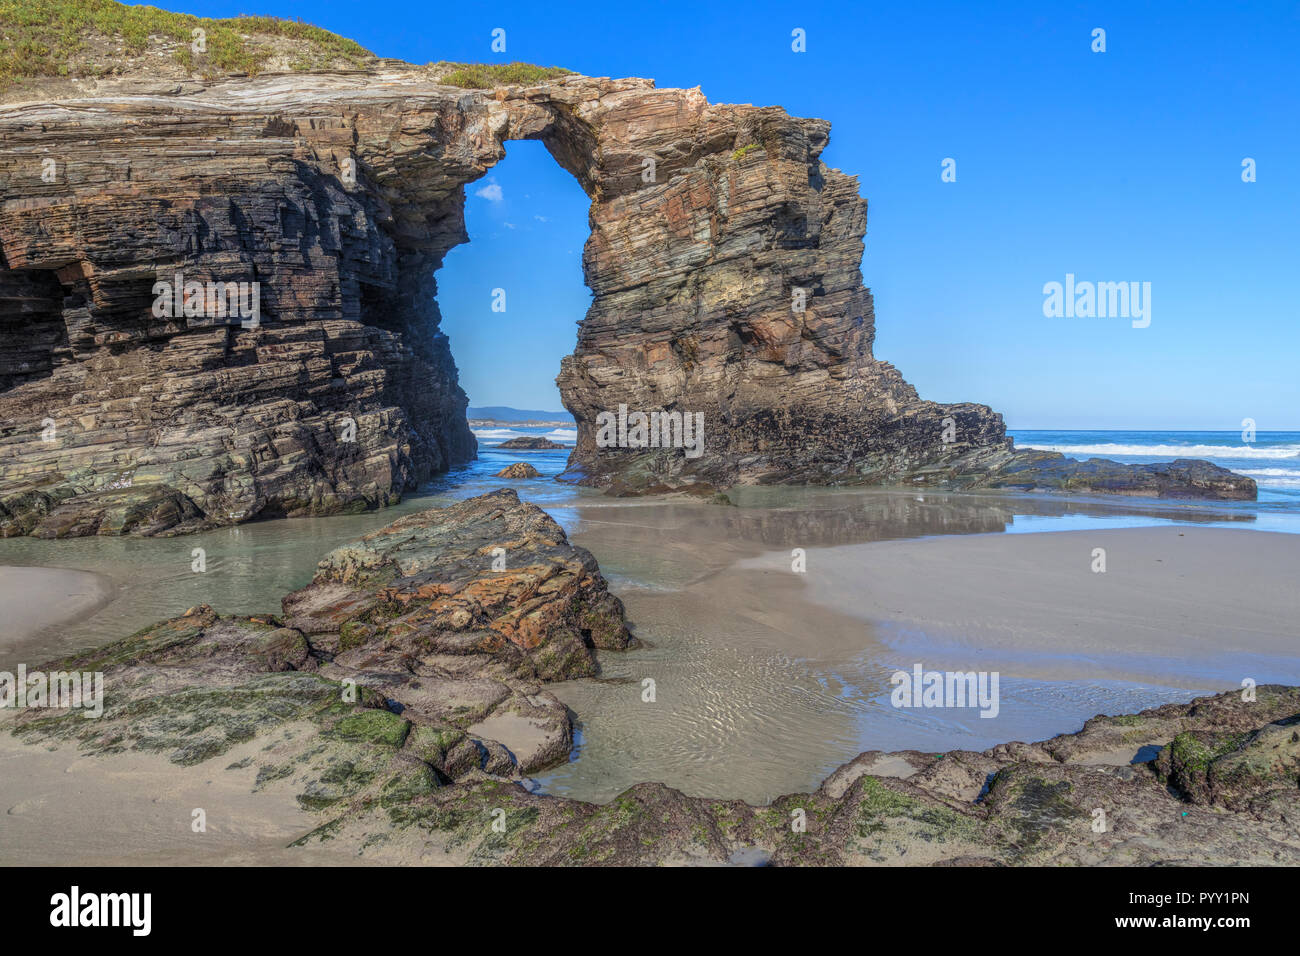 Playa de las Catedrales, A Coruña, Galizien, Spanien, Europa  Stockfotografie - Alamy